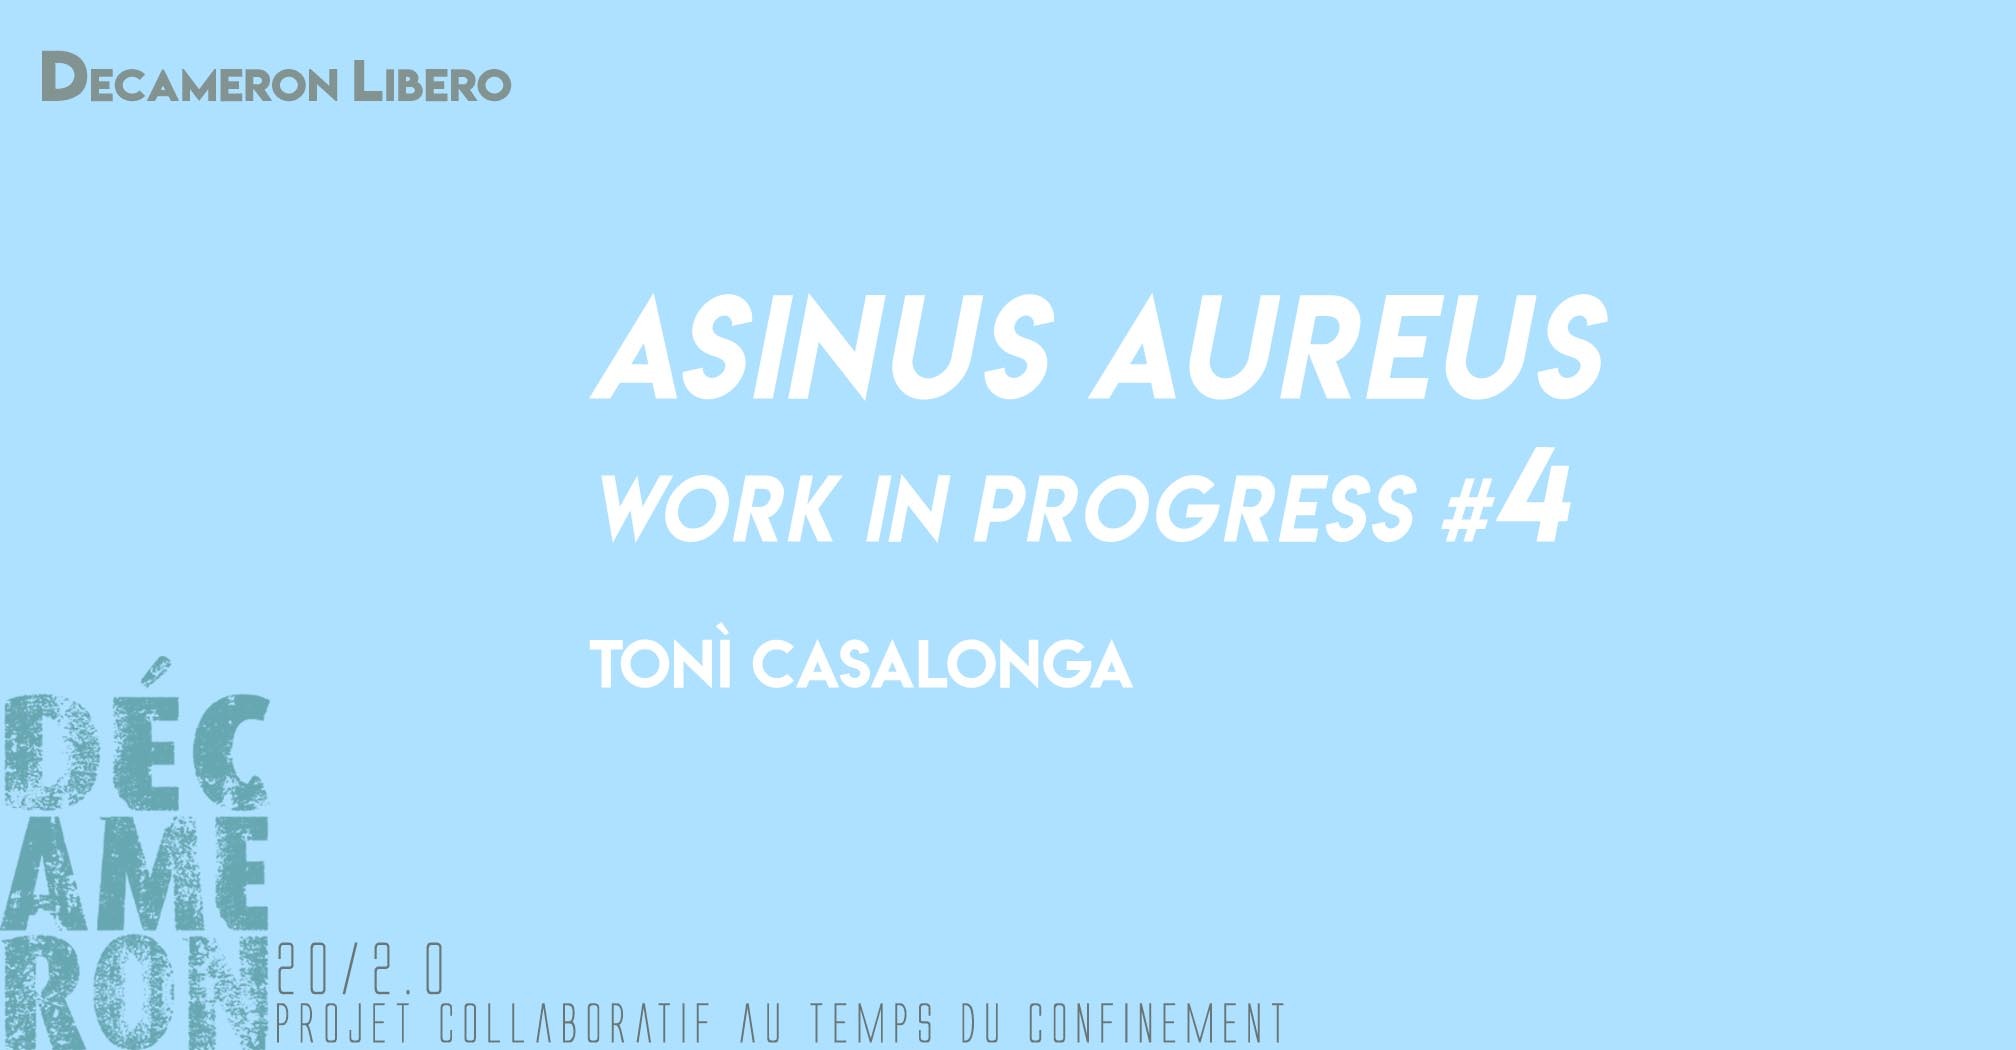 Asinus Aureus - Work in progress #4 - Tonì Casalonga